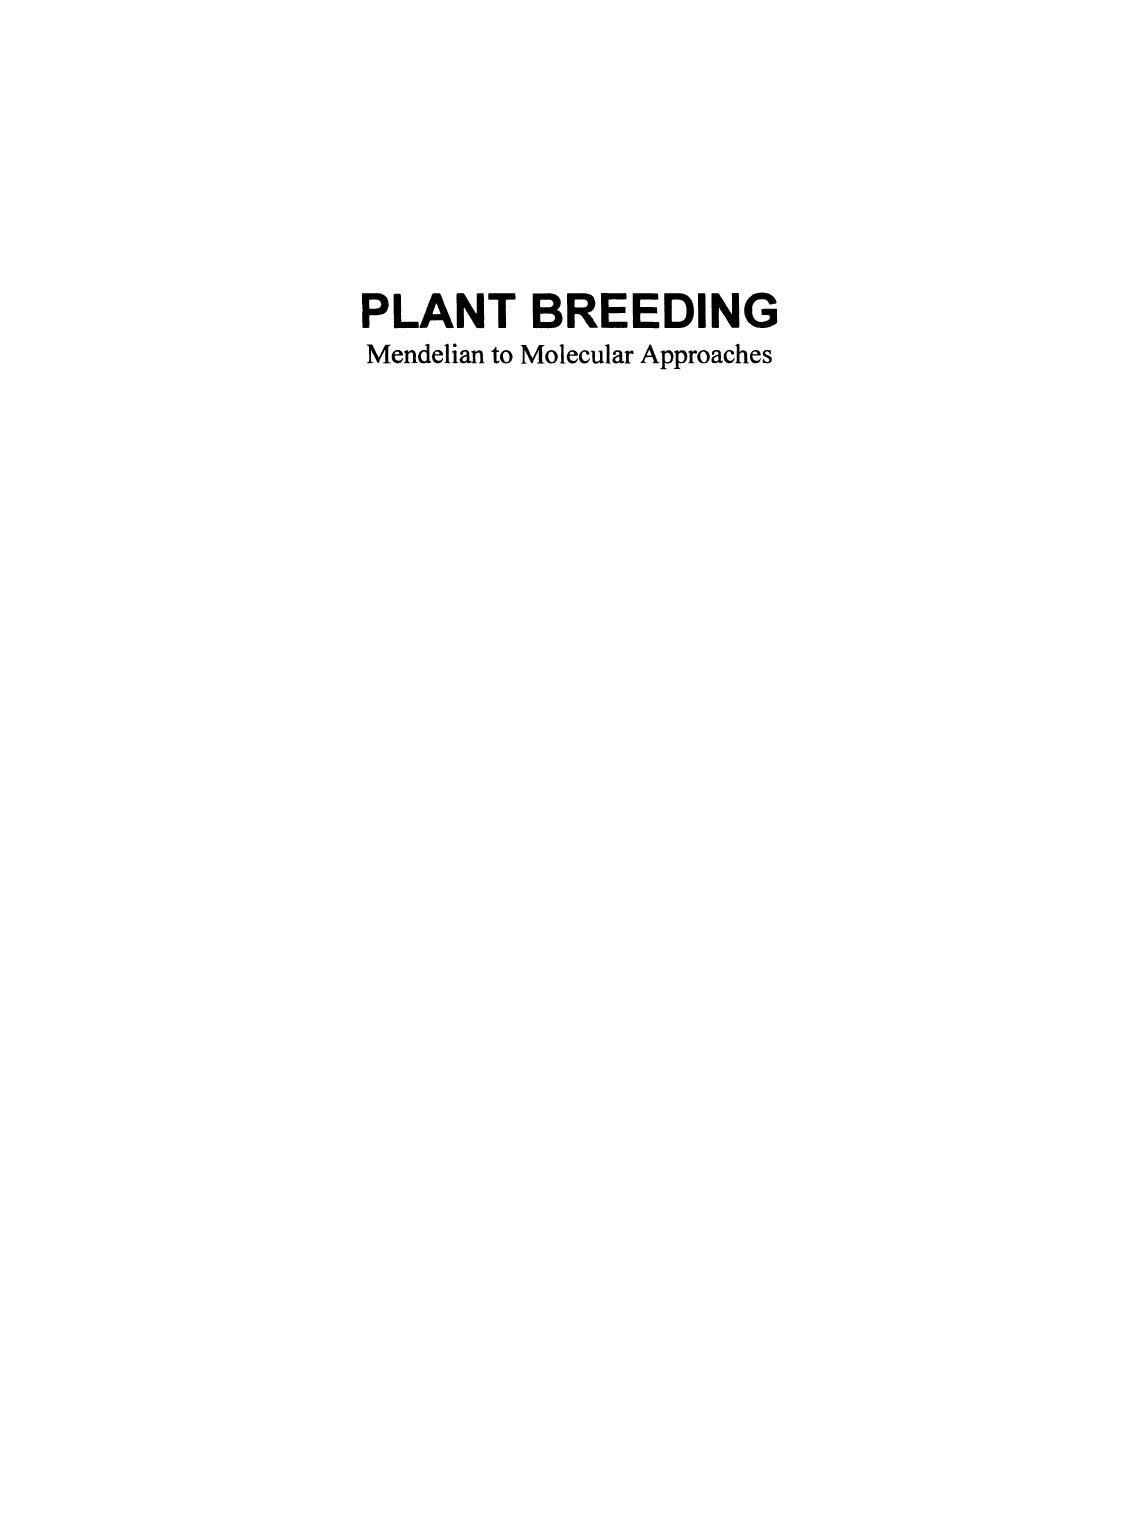 Plant Breeding  Mendelian to Molecular Approaches ( PDFDrive ), 2004